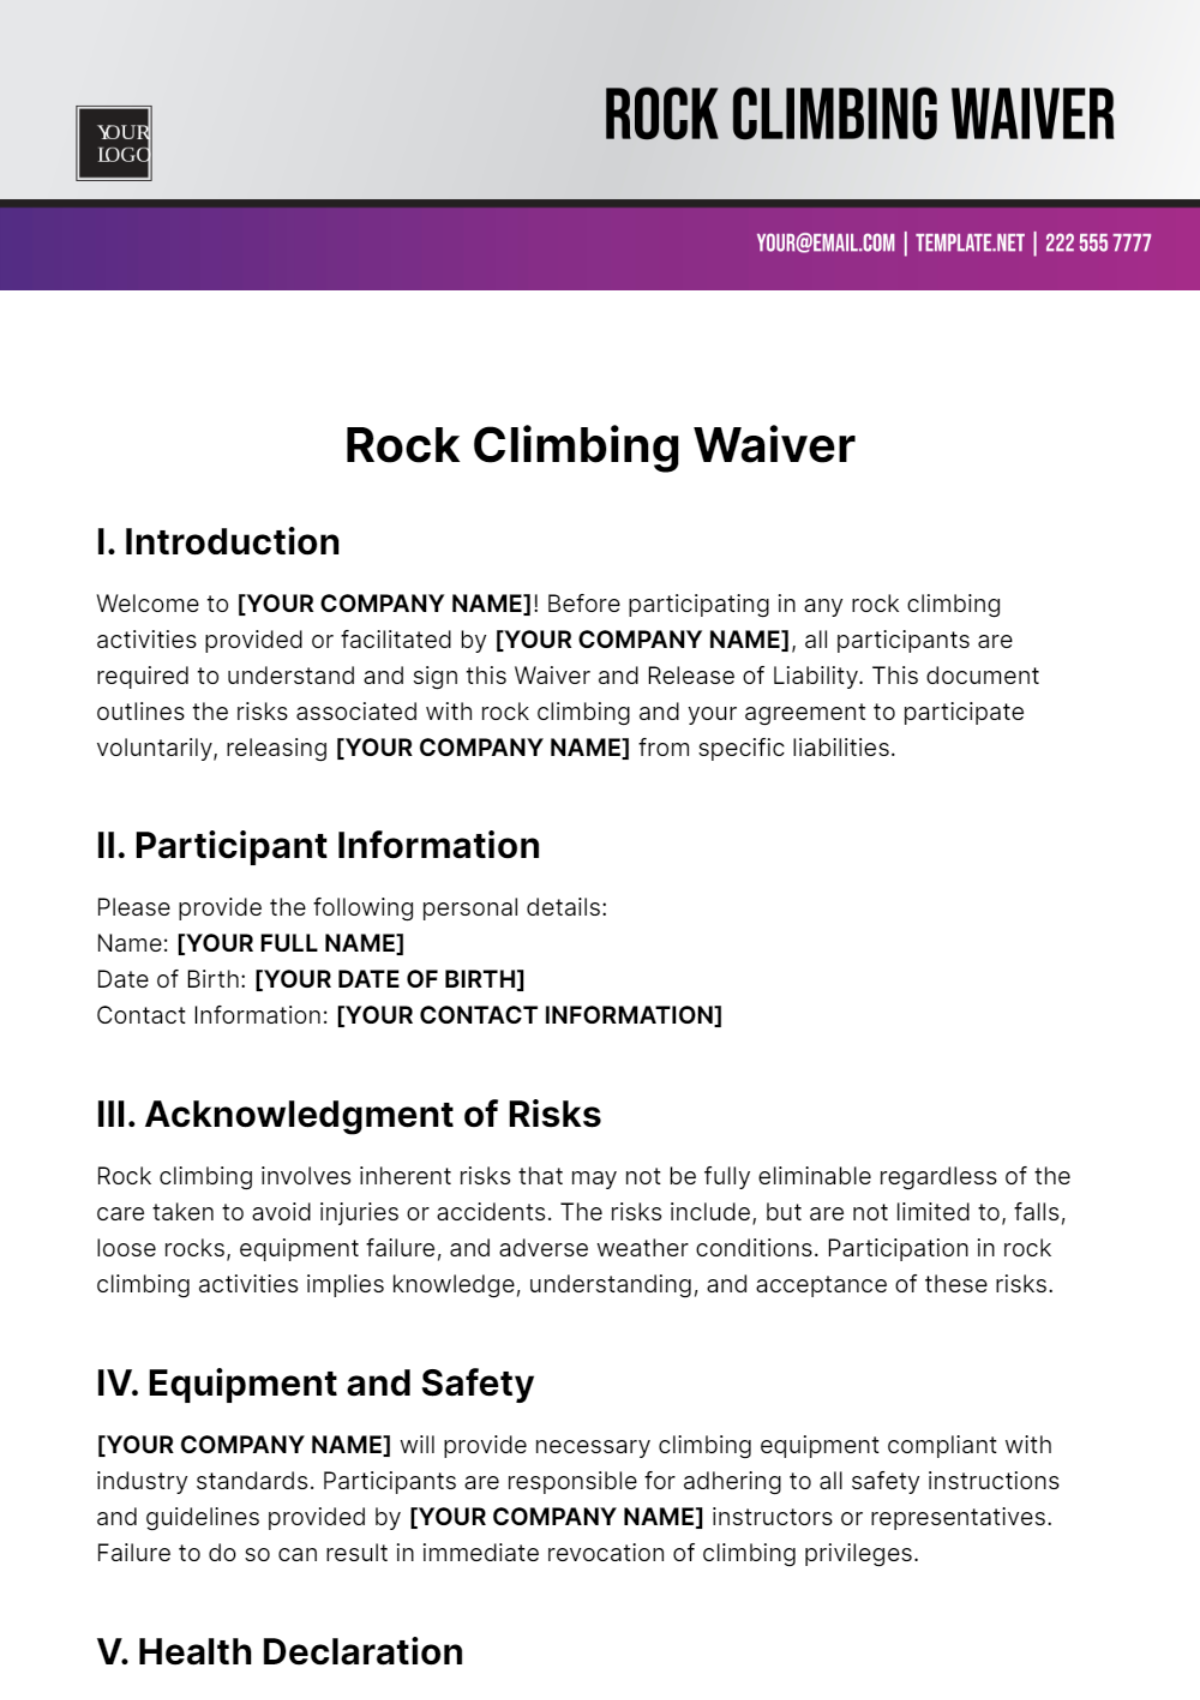 Rock Climbing Waiver Template